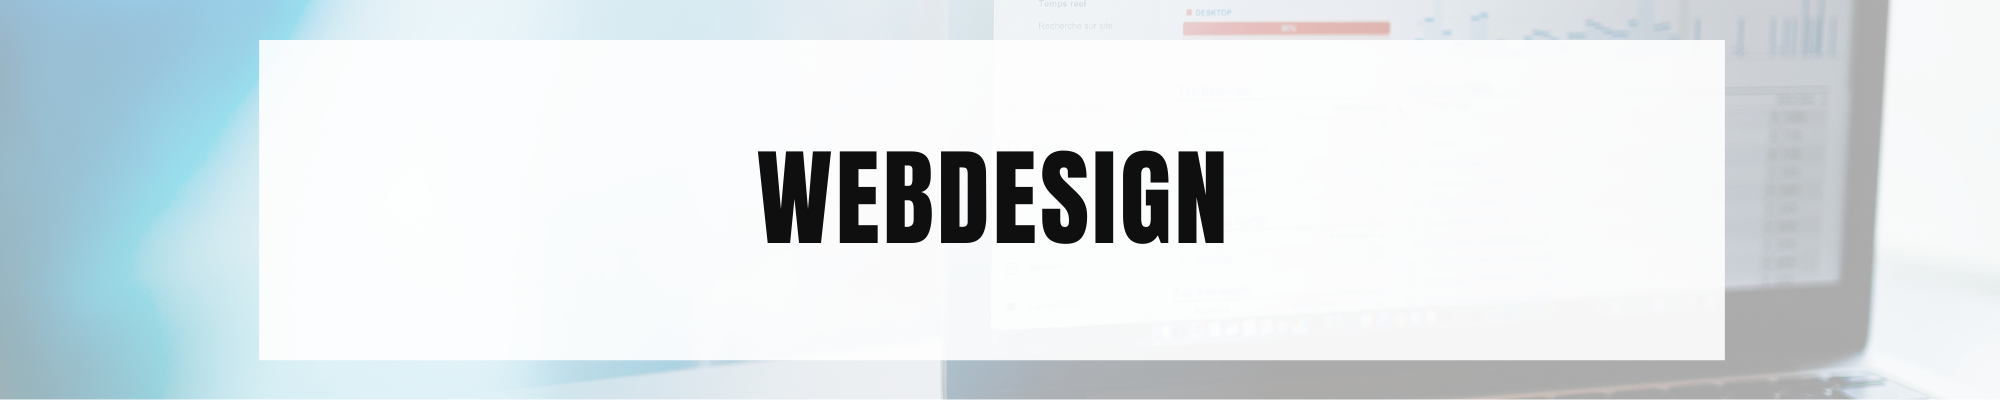 Webdesign (2)